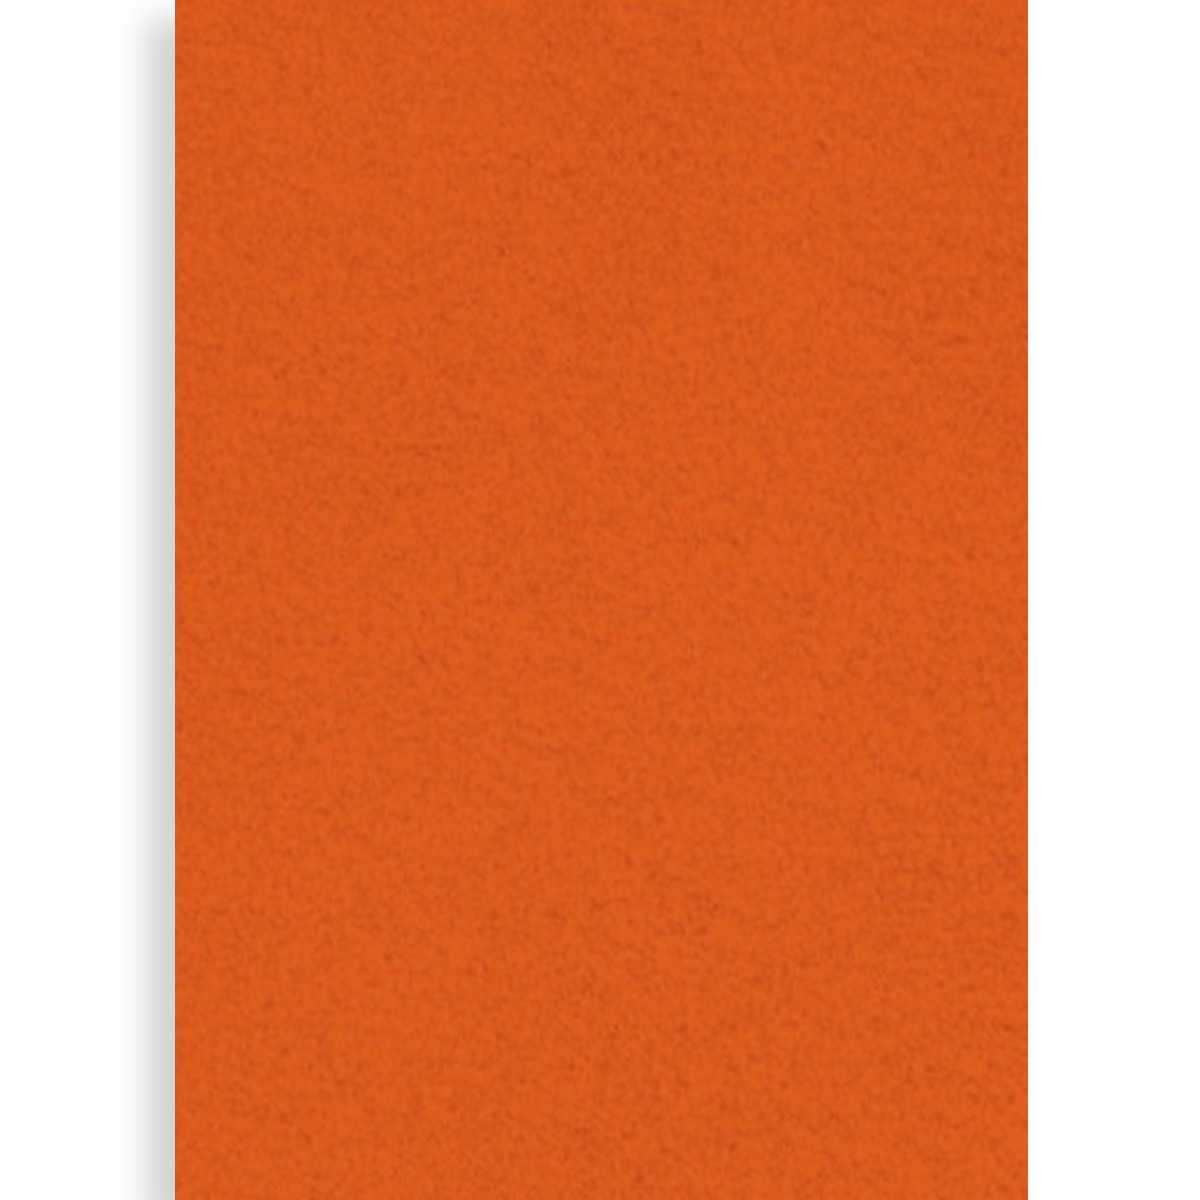 Pasla tare portocalie 40x60cm x 1 5mm MP PN668